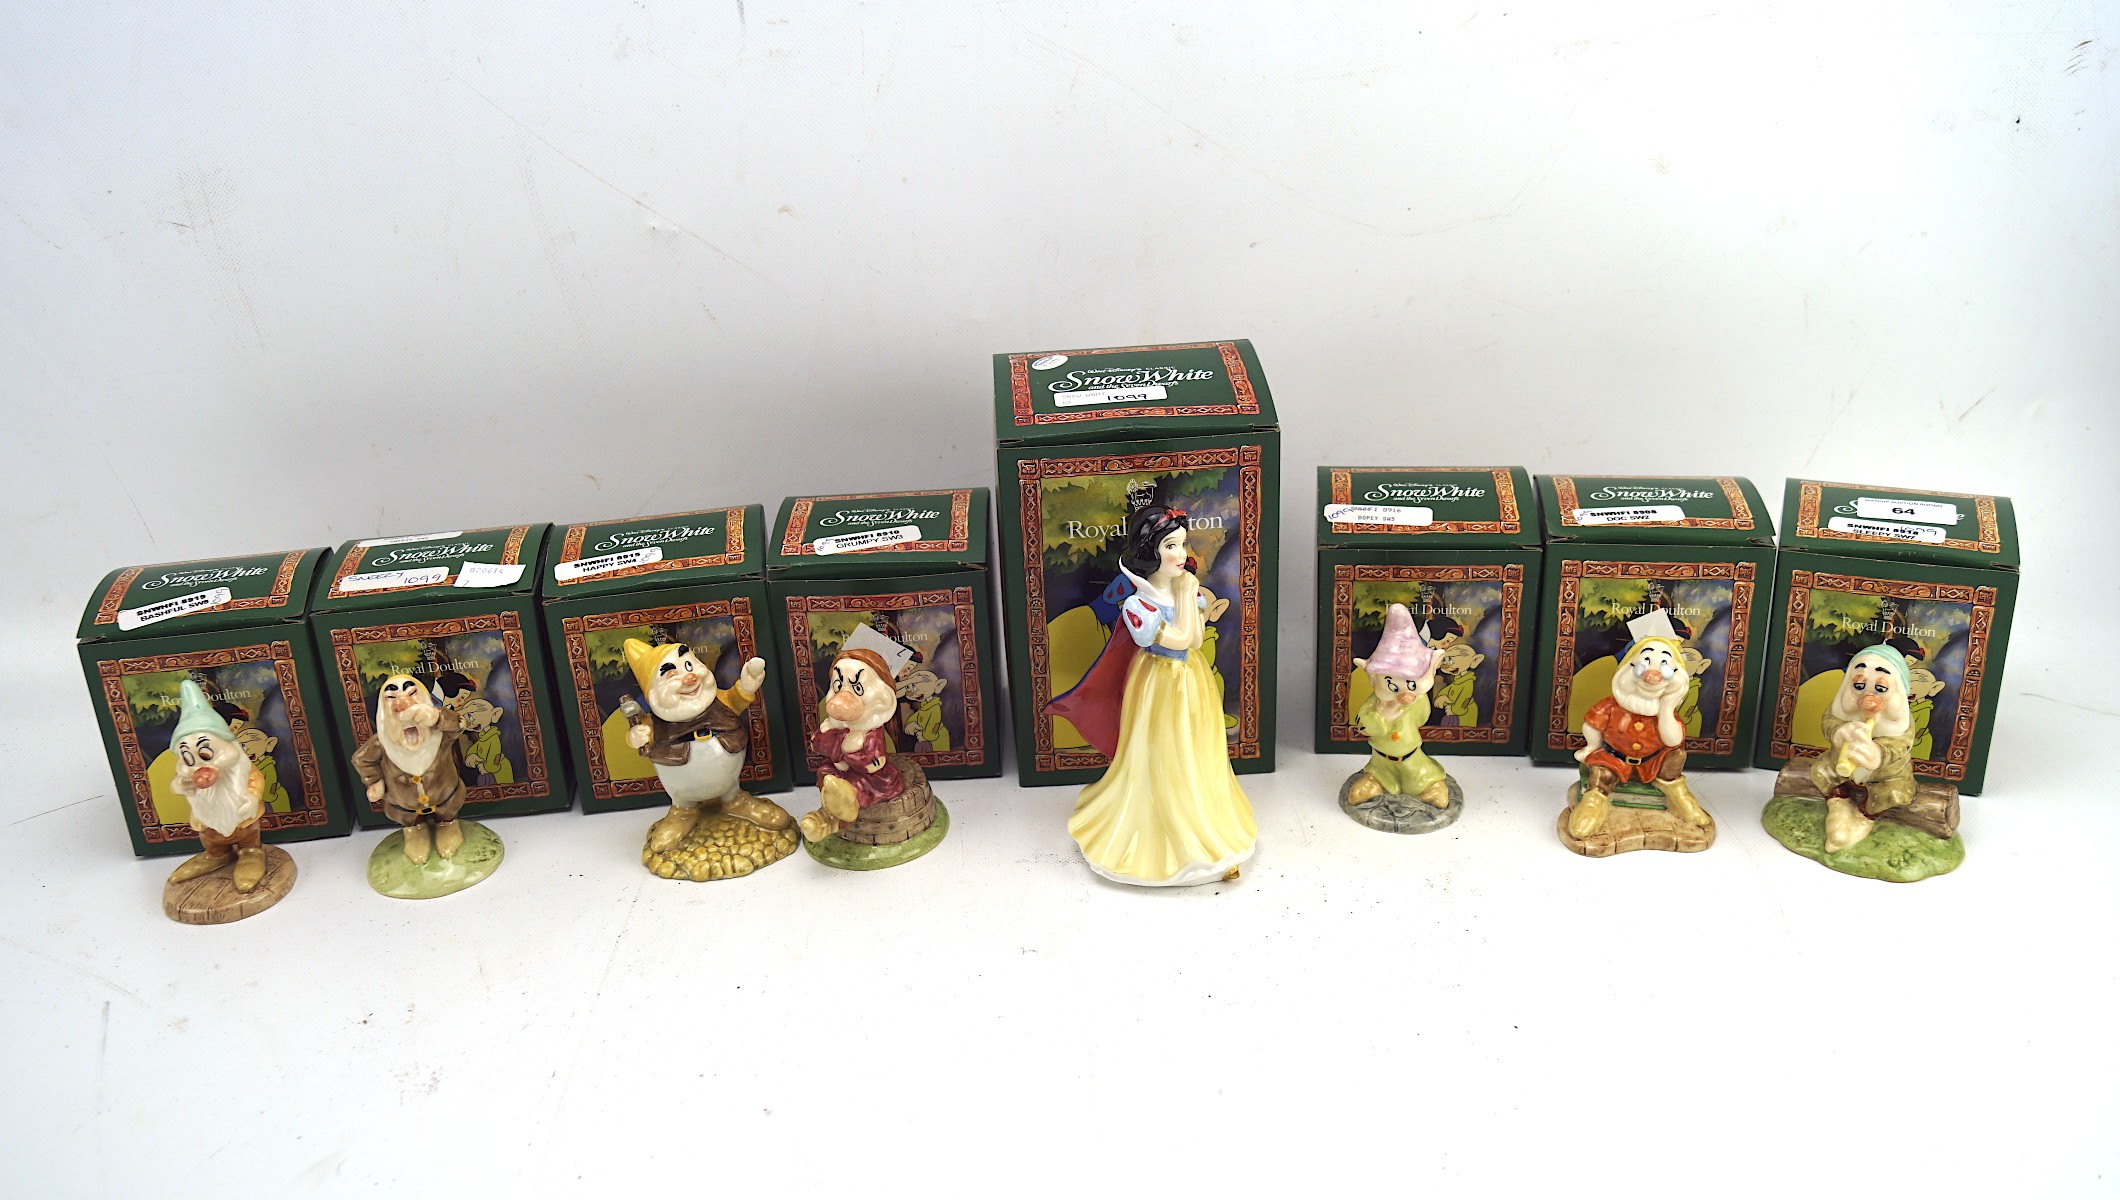 A Royal Doulton ceramic set of Snow White and the seven dwarfs,